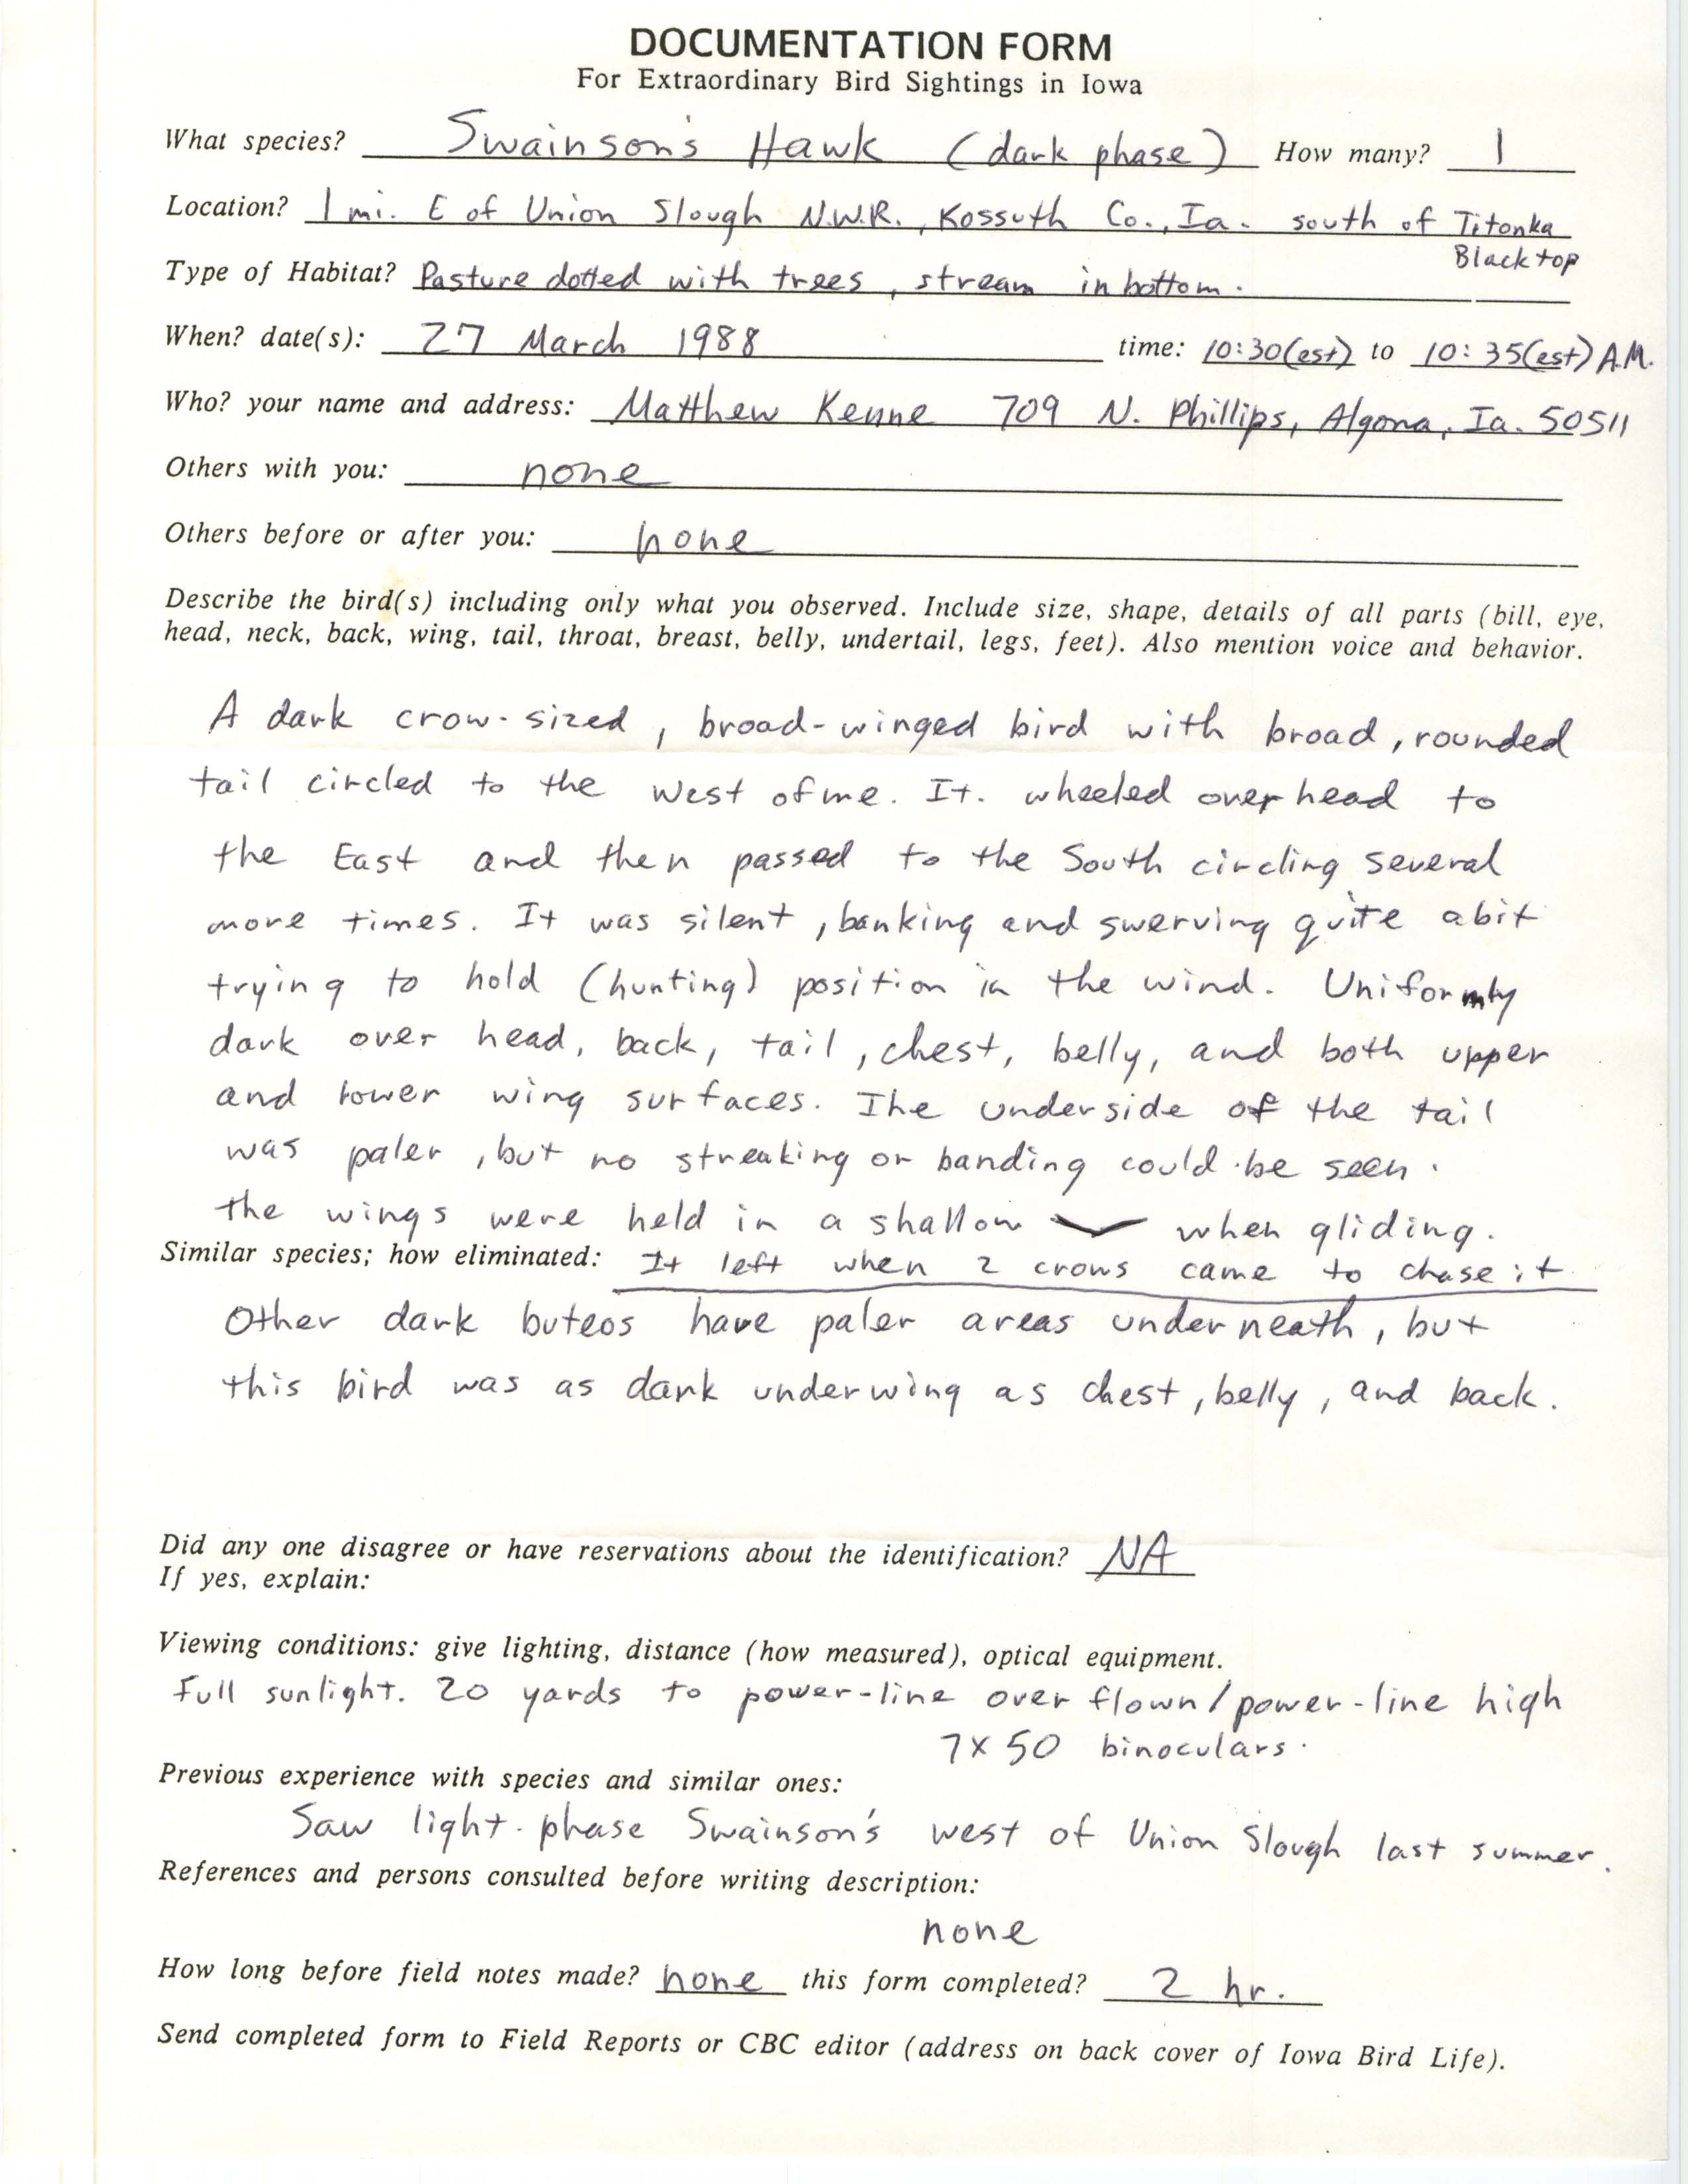 Rare bird documentation form for Swainson's Hawk at Union Slough National Wildlife Refuge, 1988